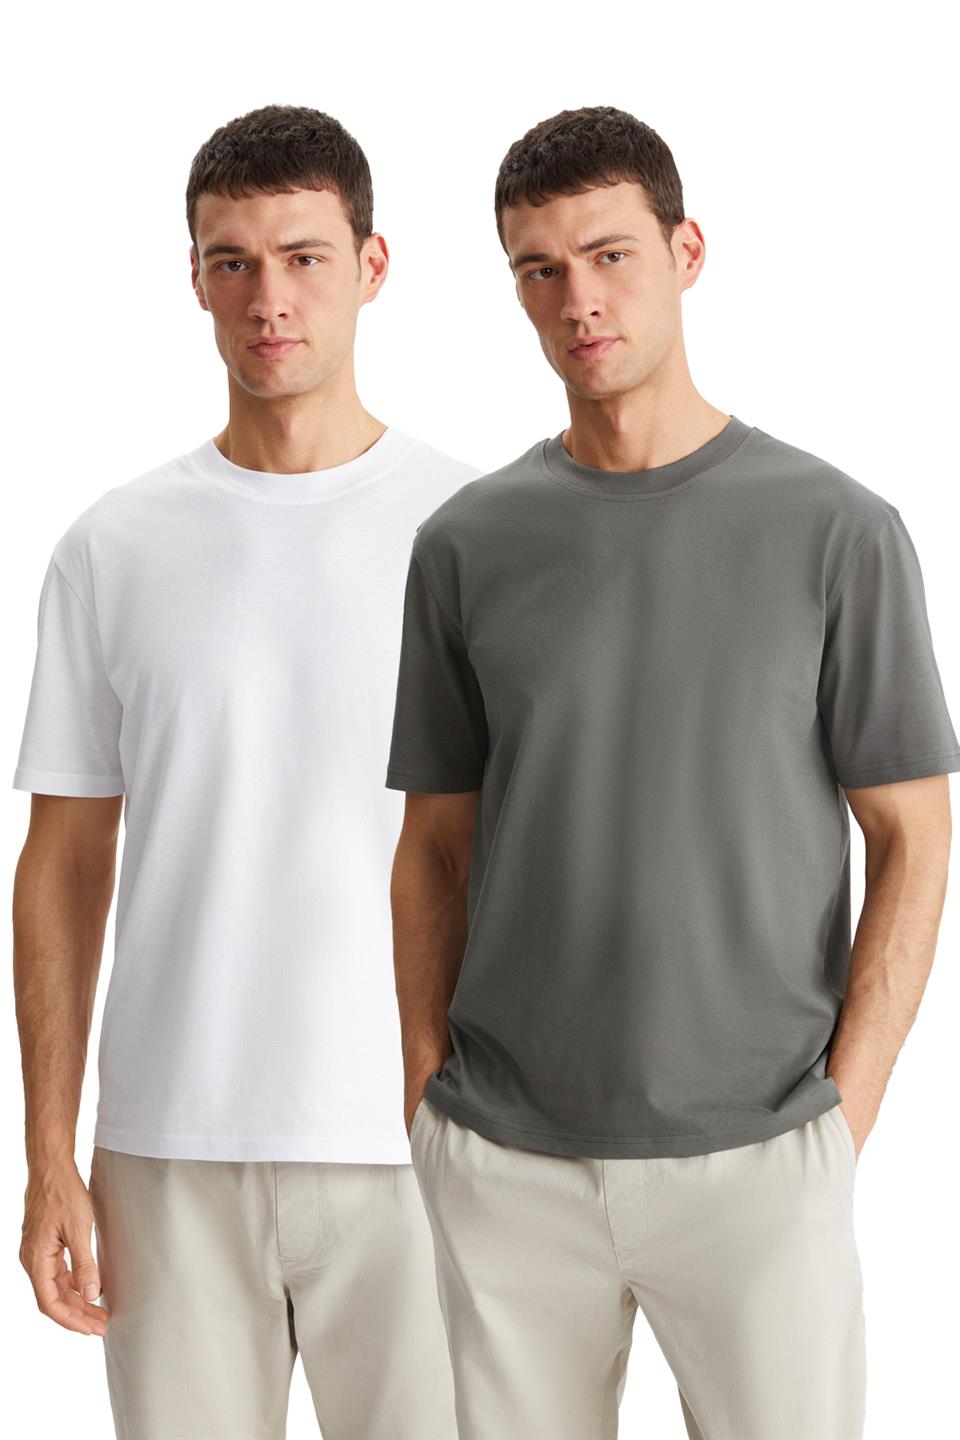 DAXTON Basic Regular Gri - Beyaz 2'li T-Shirt